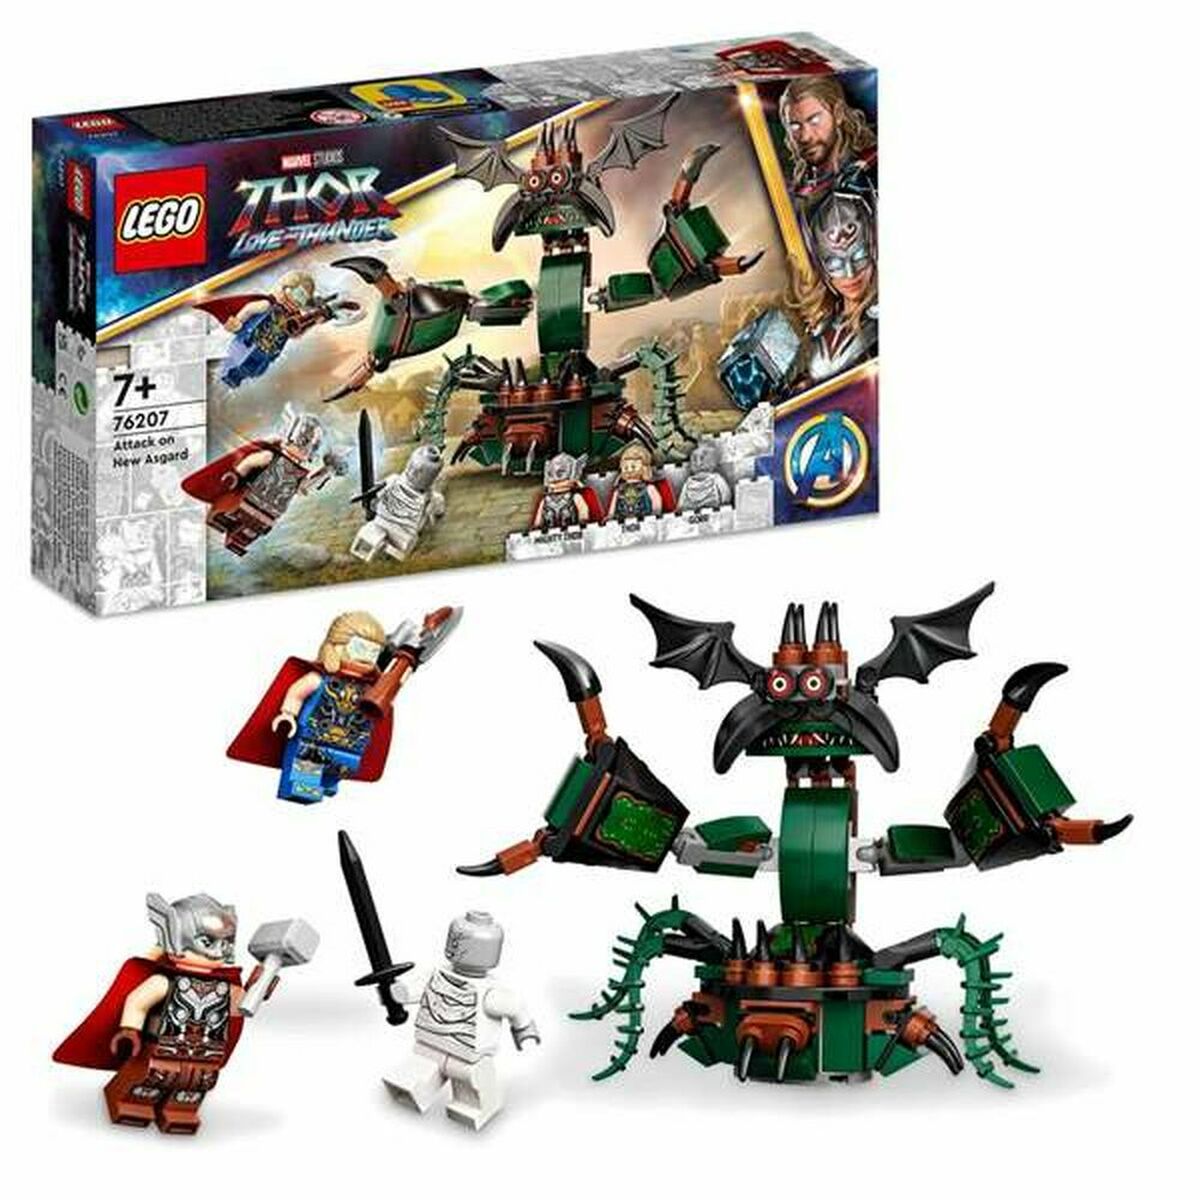 Zestaw konstrukcji Lego Thor Love and Thunder: Atak na nowy Asgard